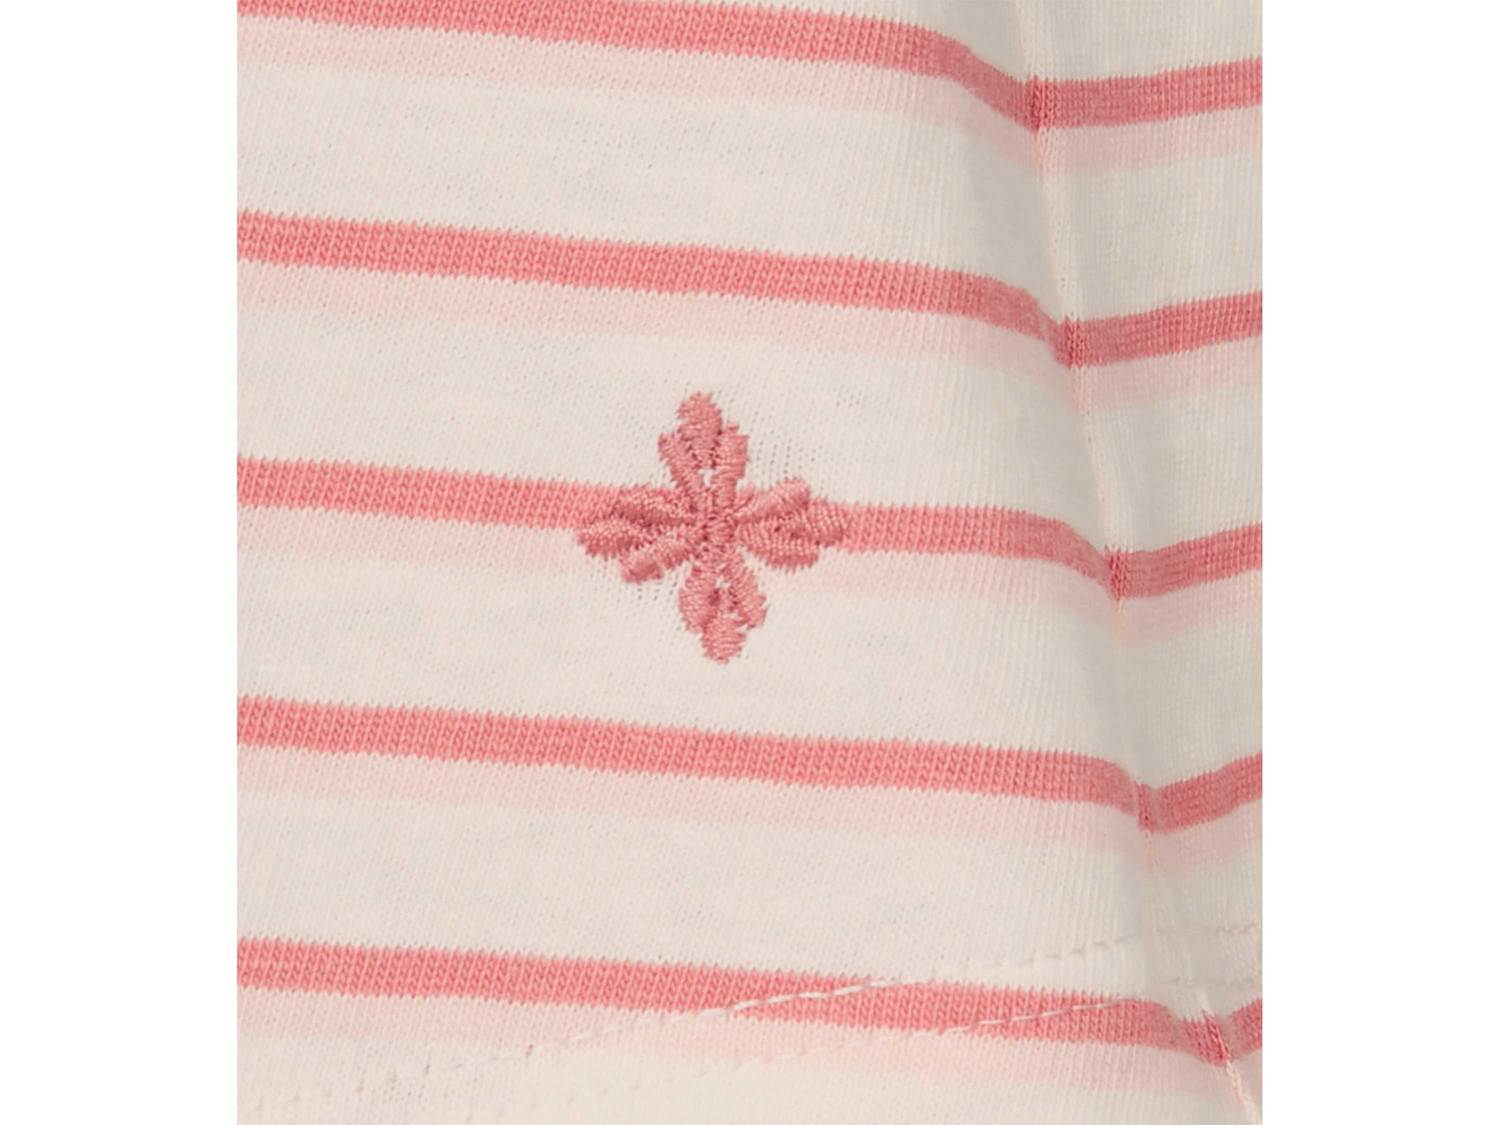 Koszula nocna Esmara Lingerie, cena 19,99 PLN 
- rozmiary: S-L
- 100% bawełny
&nbsp;
- ...